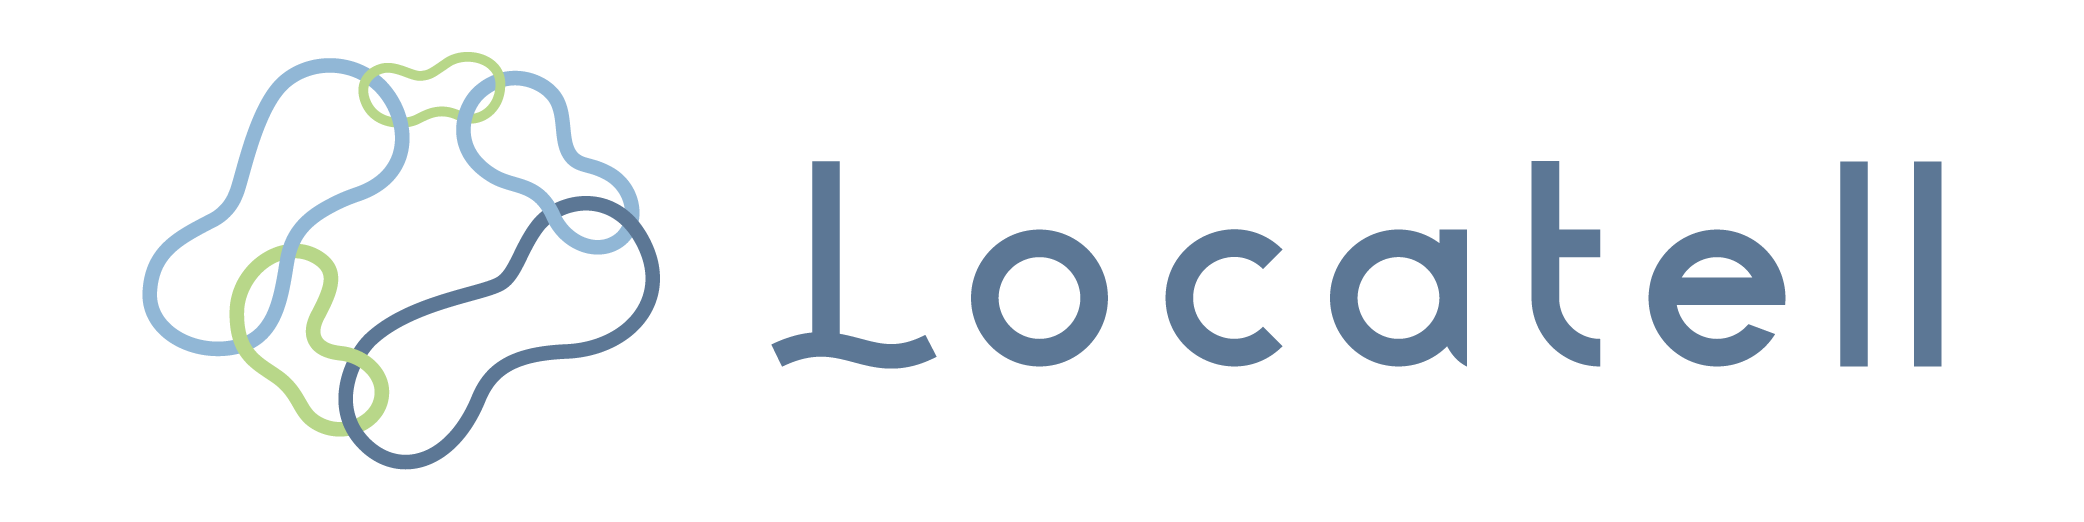 Locatell, Inc.